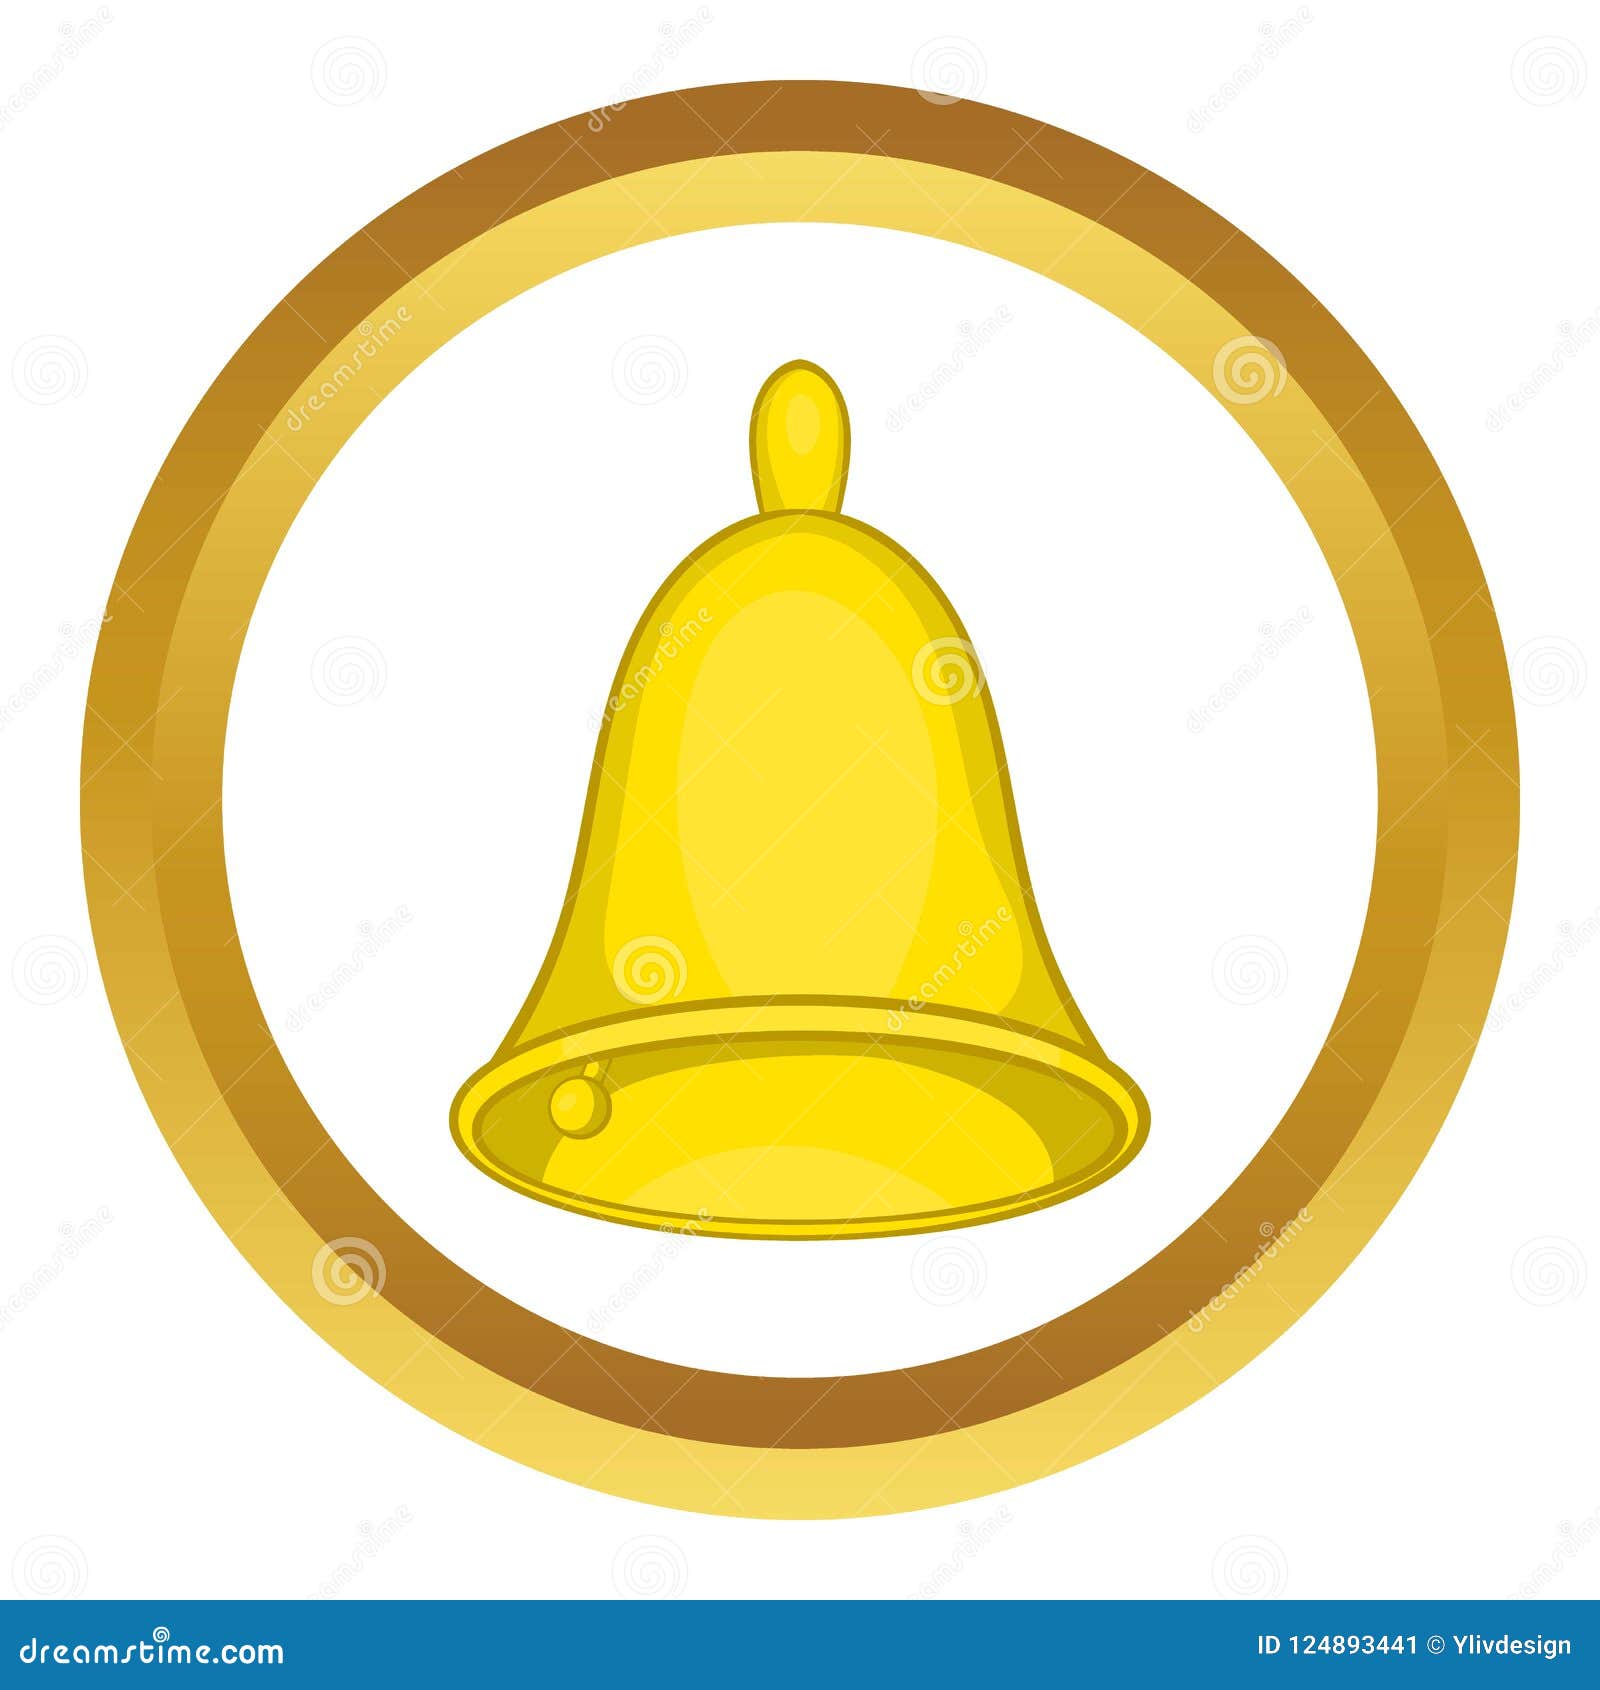 Golden hand bell icon stock illustration. Illustration of copper - 124893441